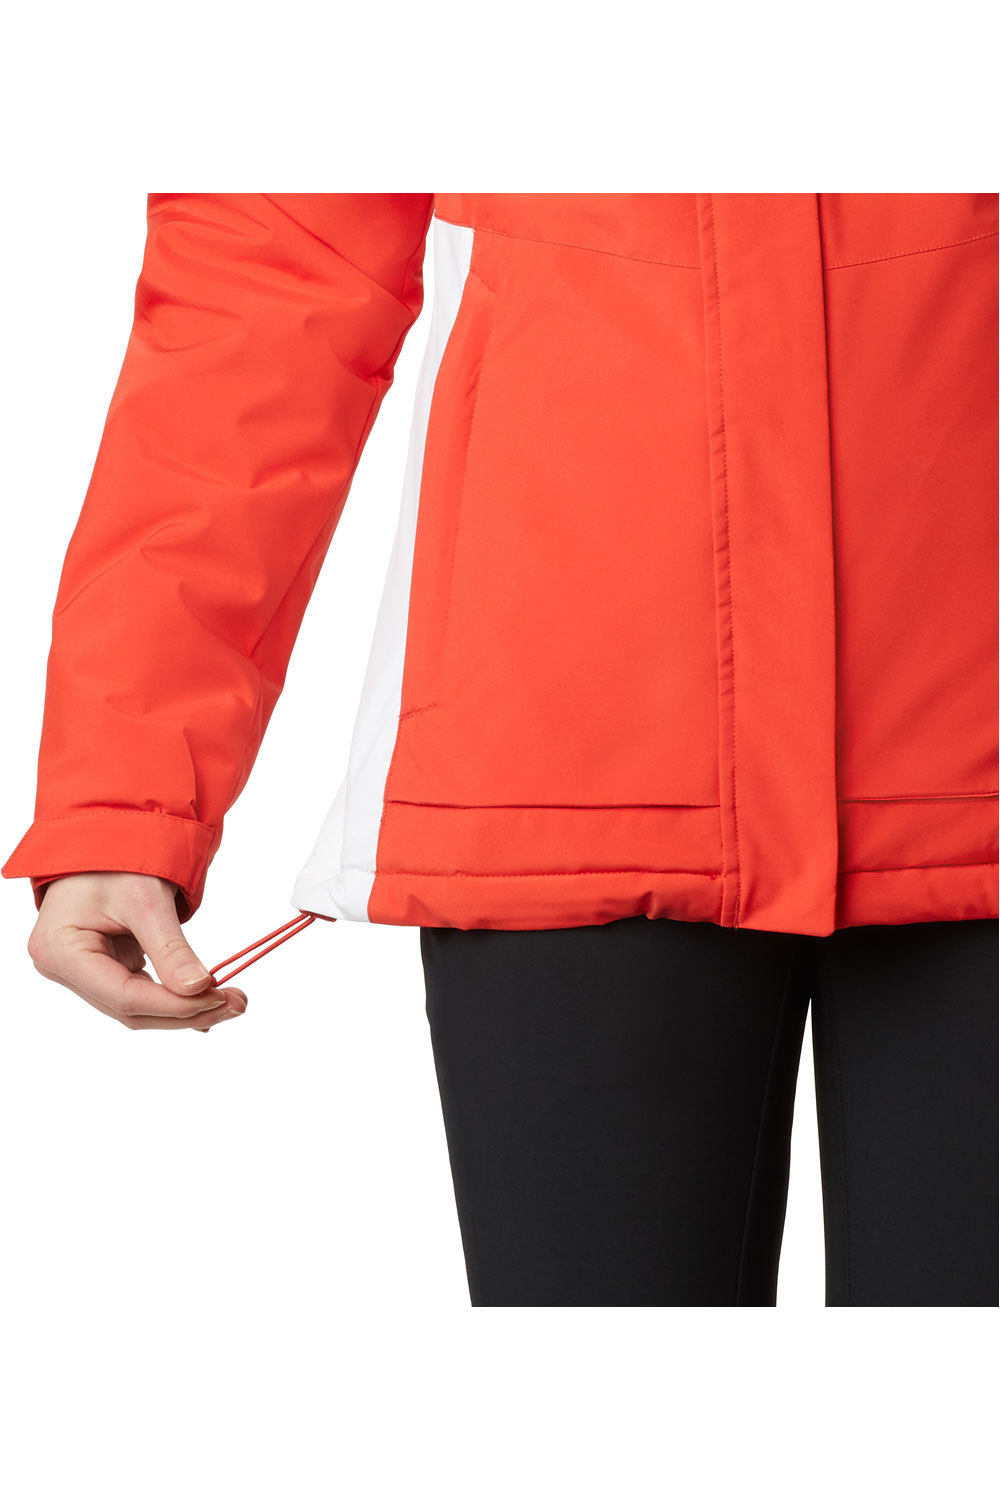 Columbia chaqueta esquí mujer Ava Alpine Insulated Jacket 04